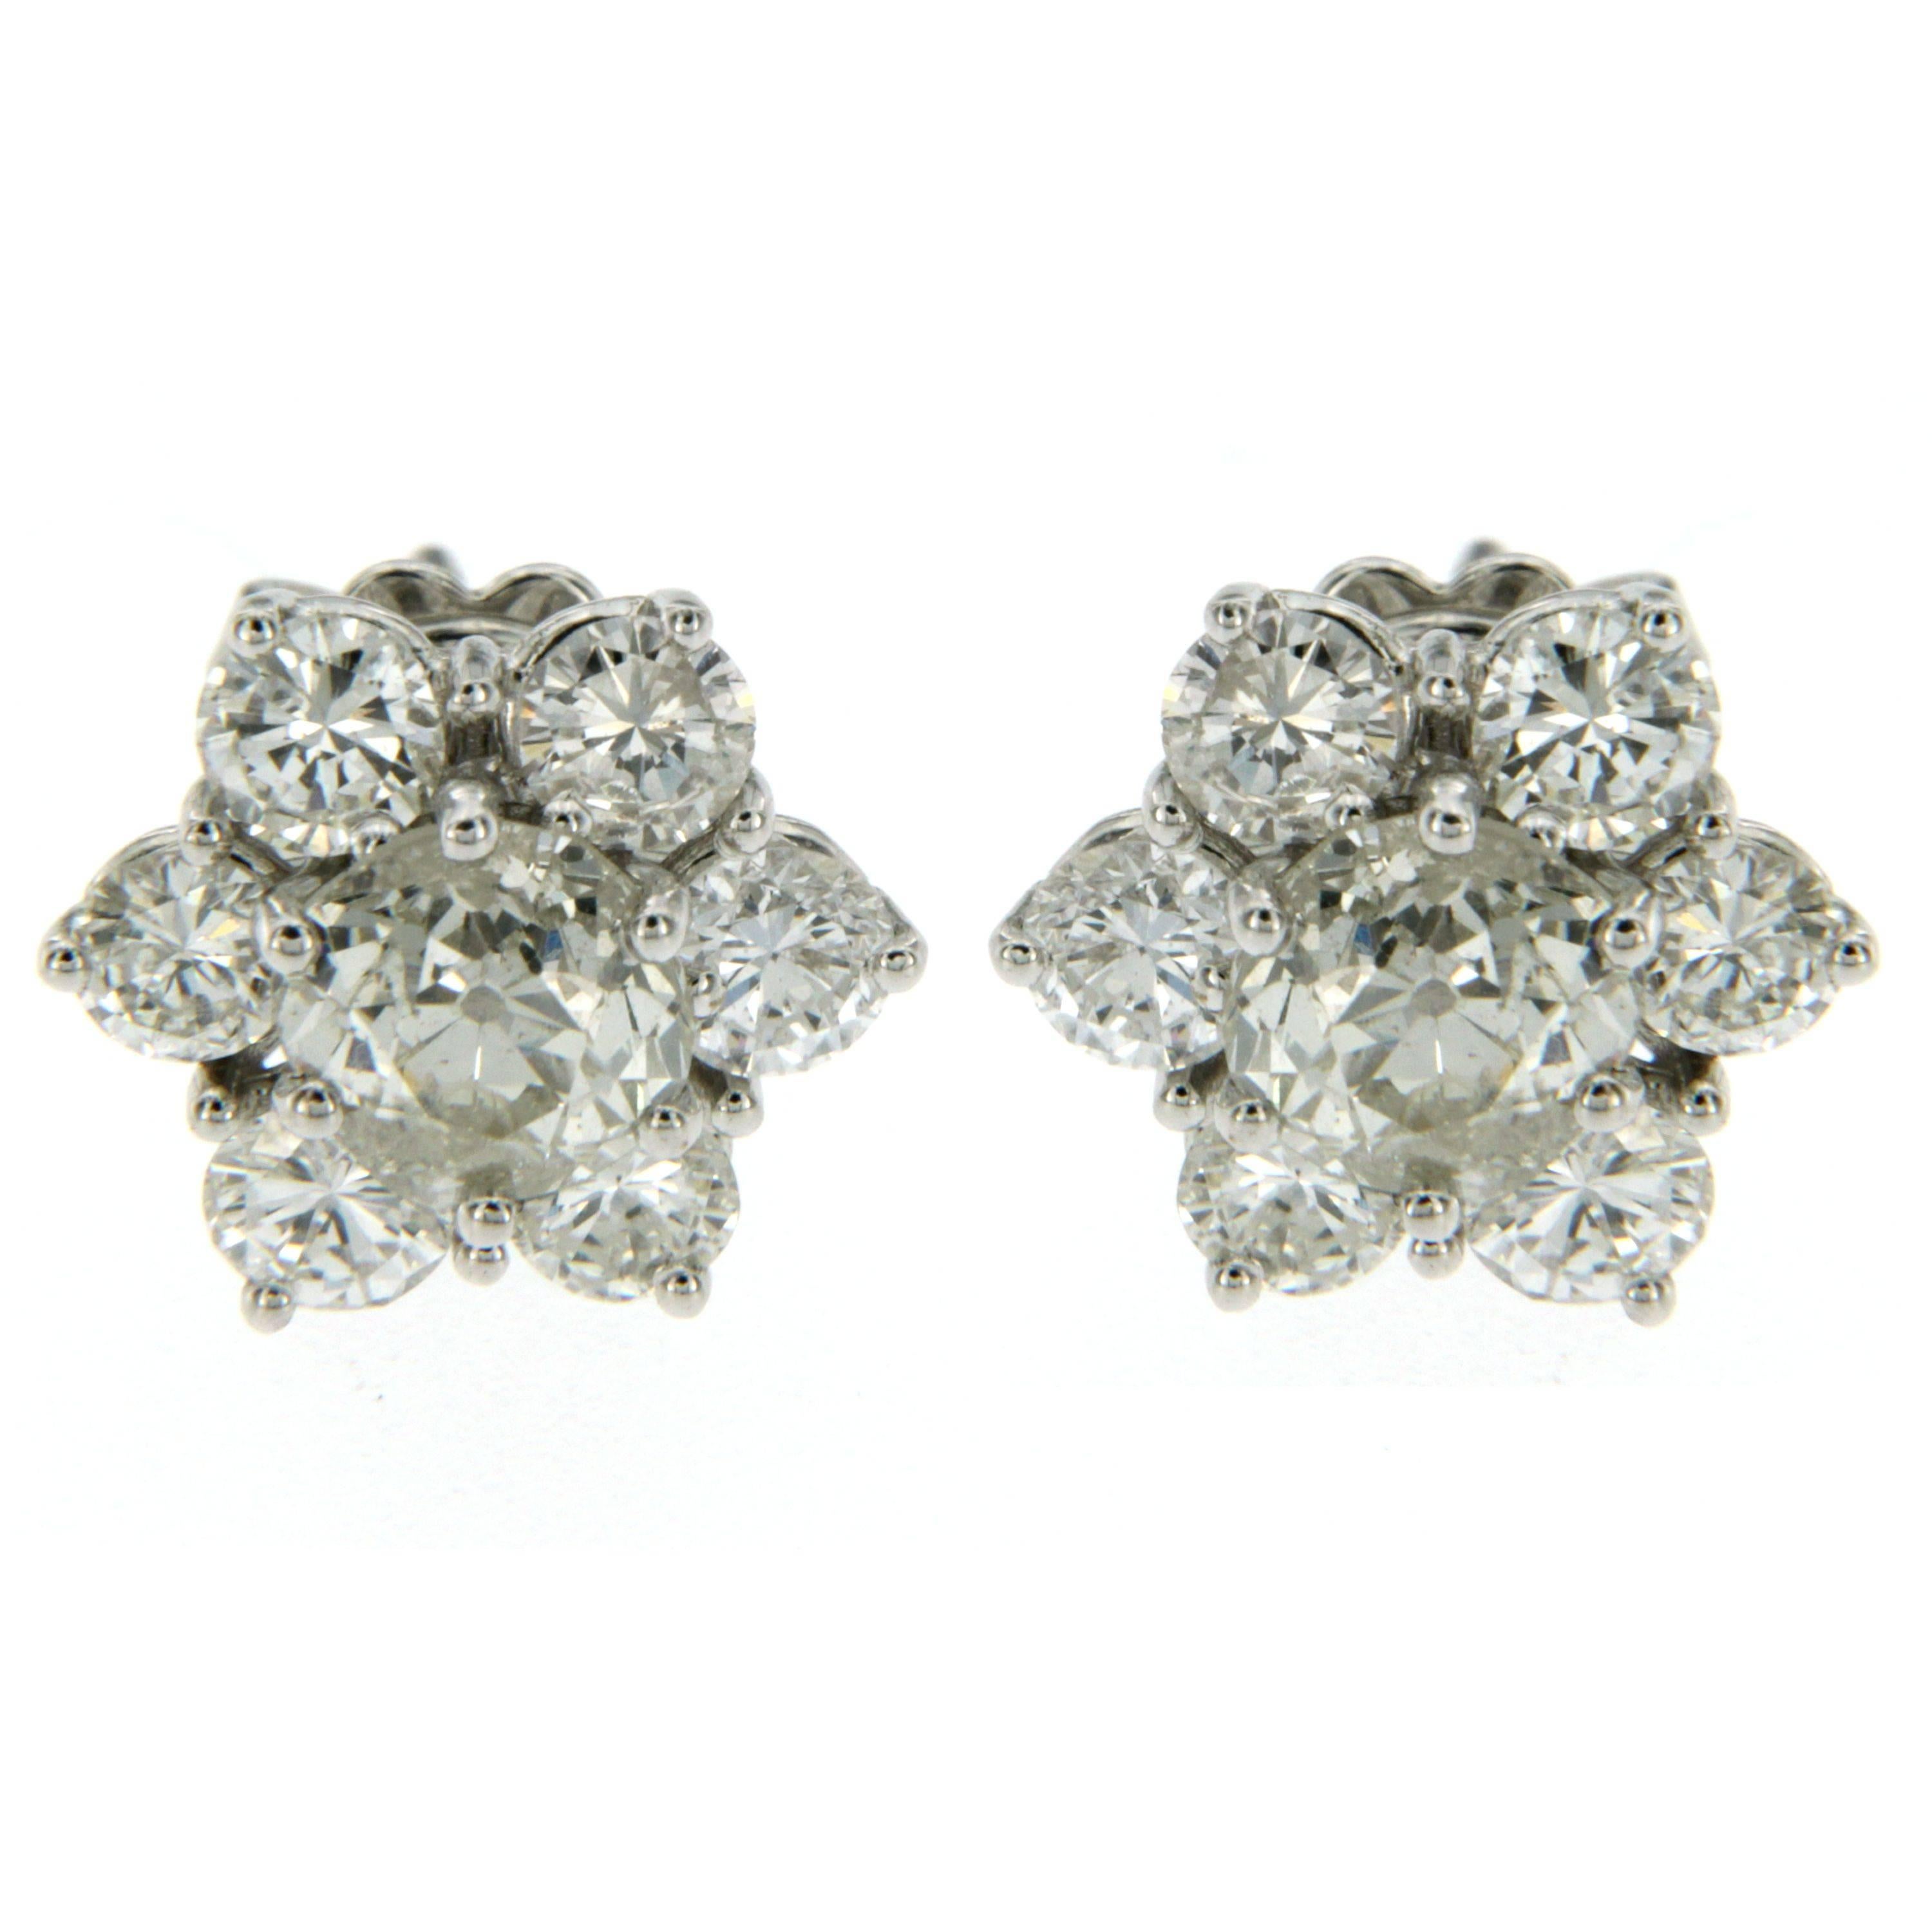 Edwardian 1930s 3.76 Carats Old Mine Cut Diamonds Gold Cluster Earrings